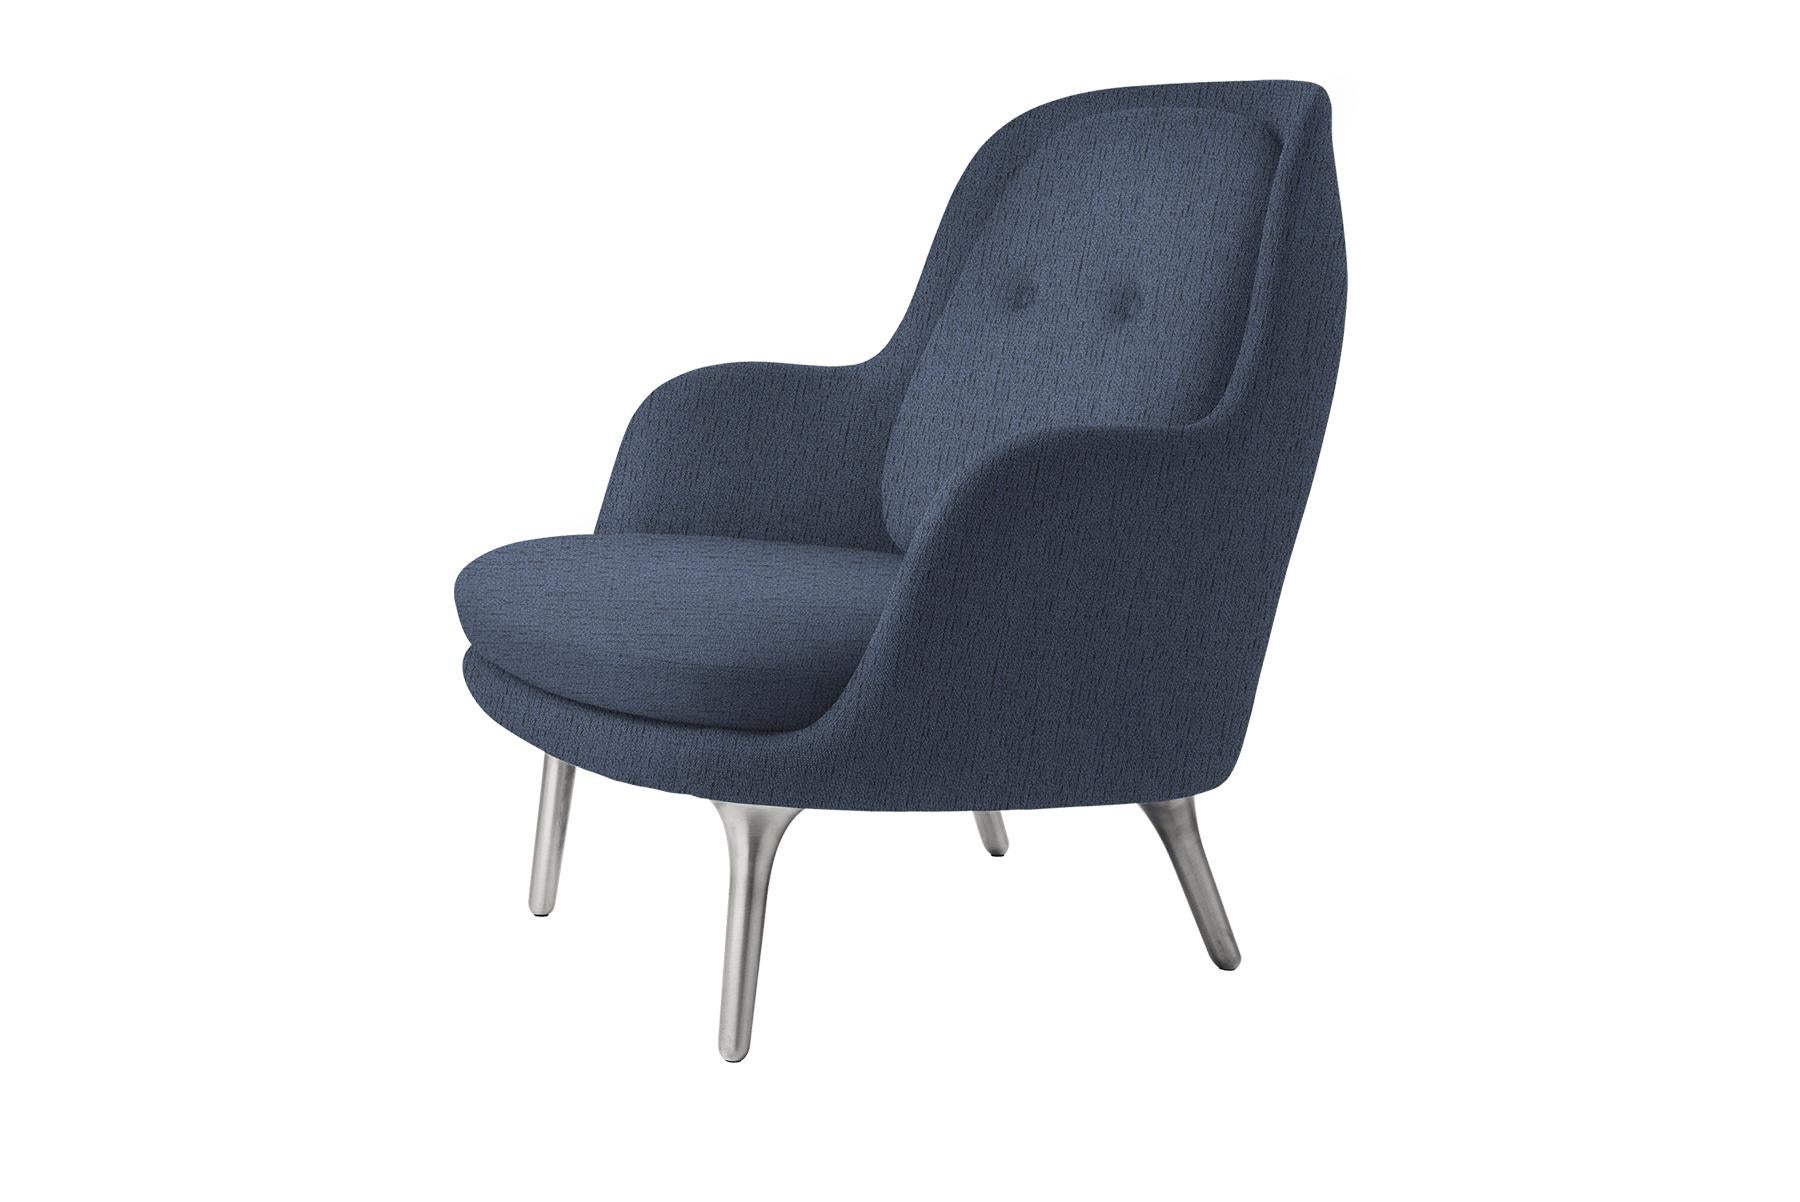 American Jaime Hayon Fri Model Jh4 Lounge Chair, Aluminium For Sale